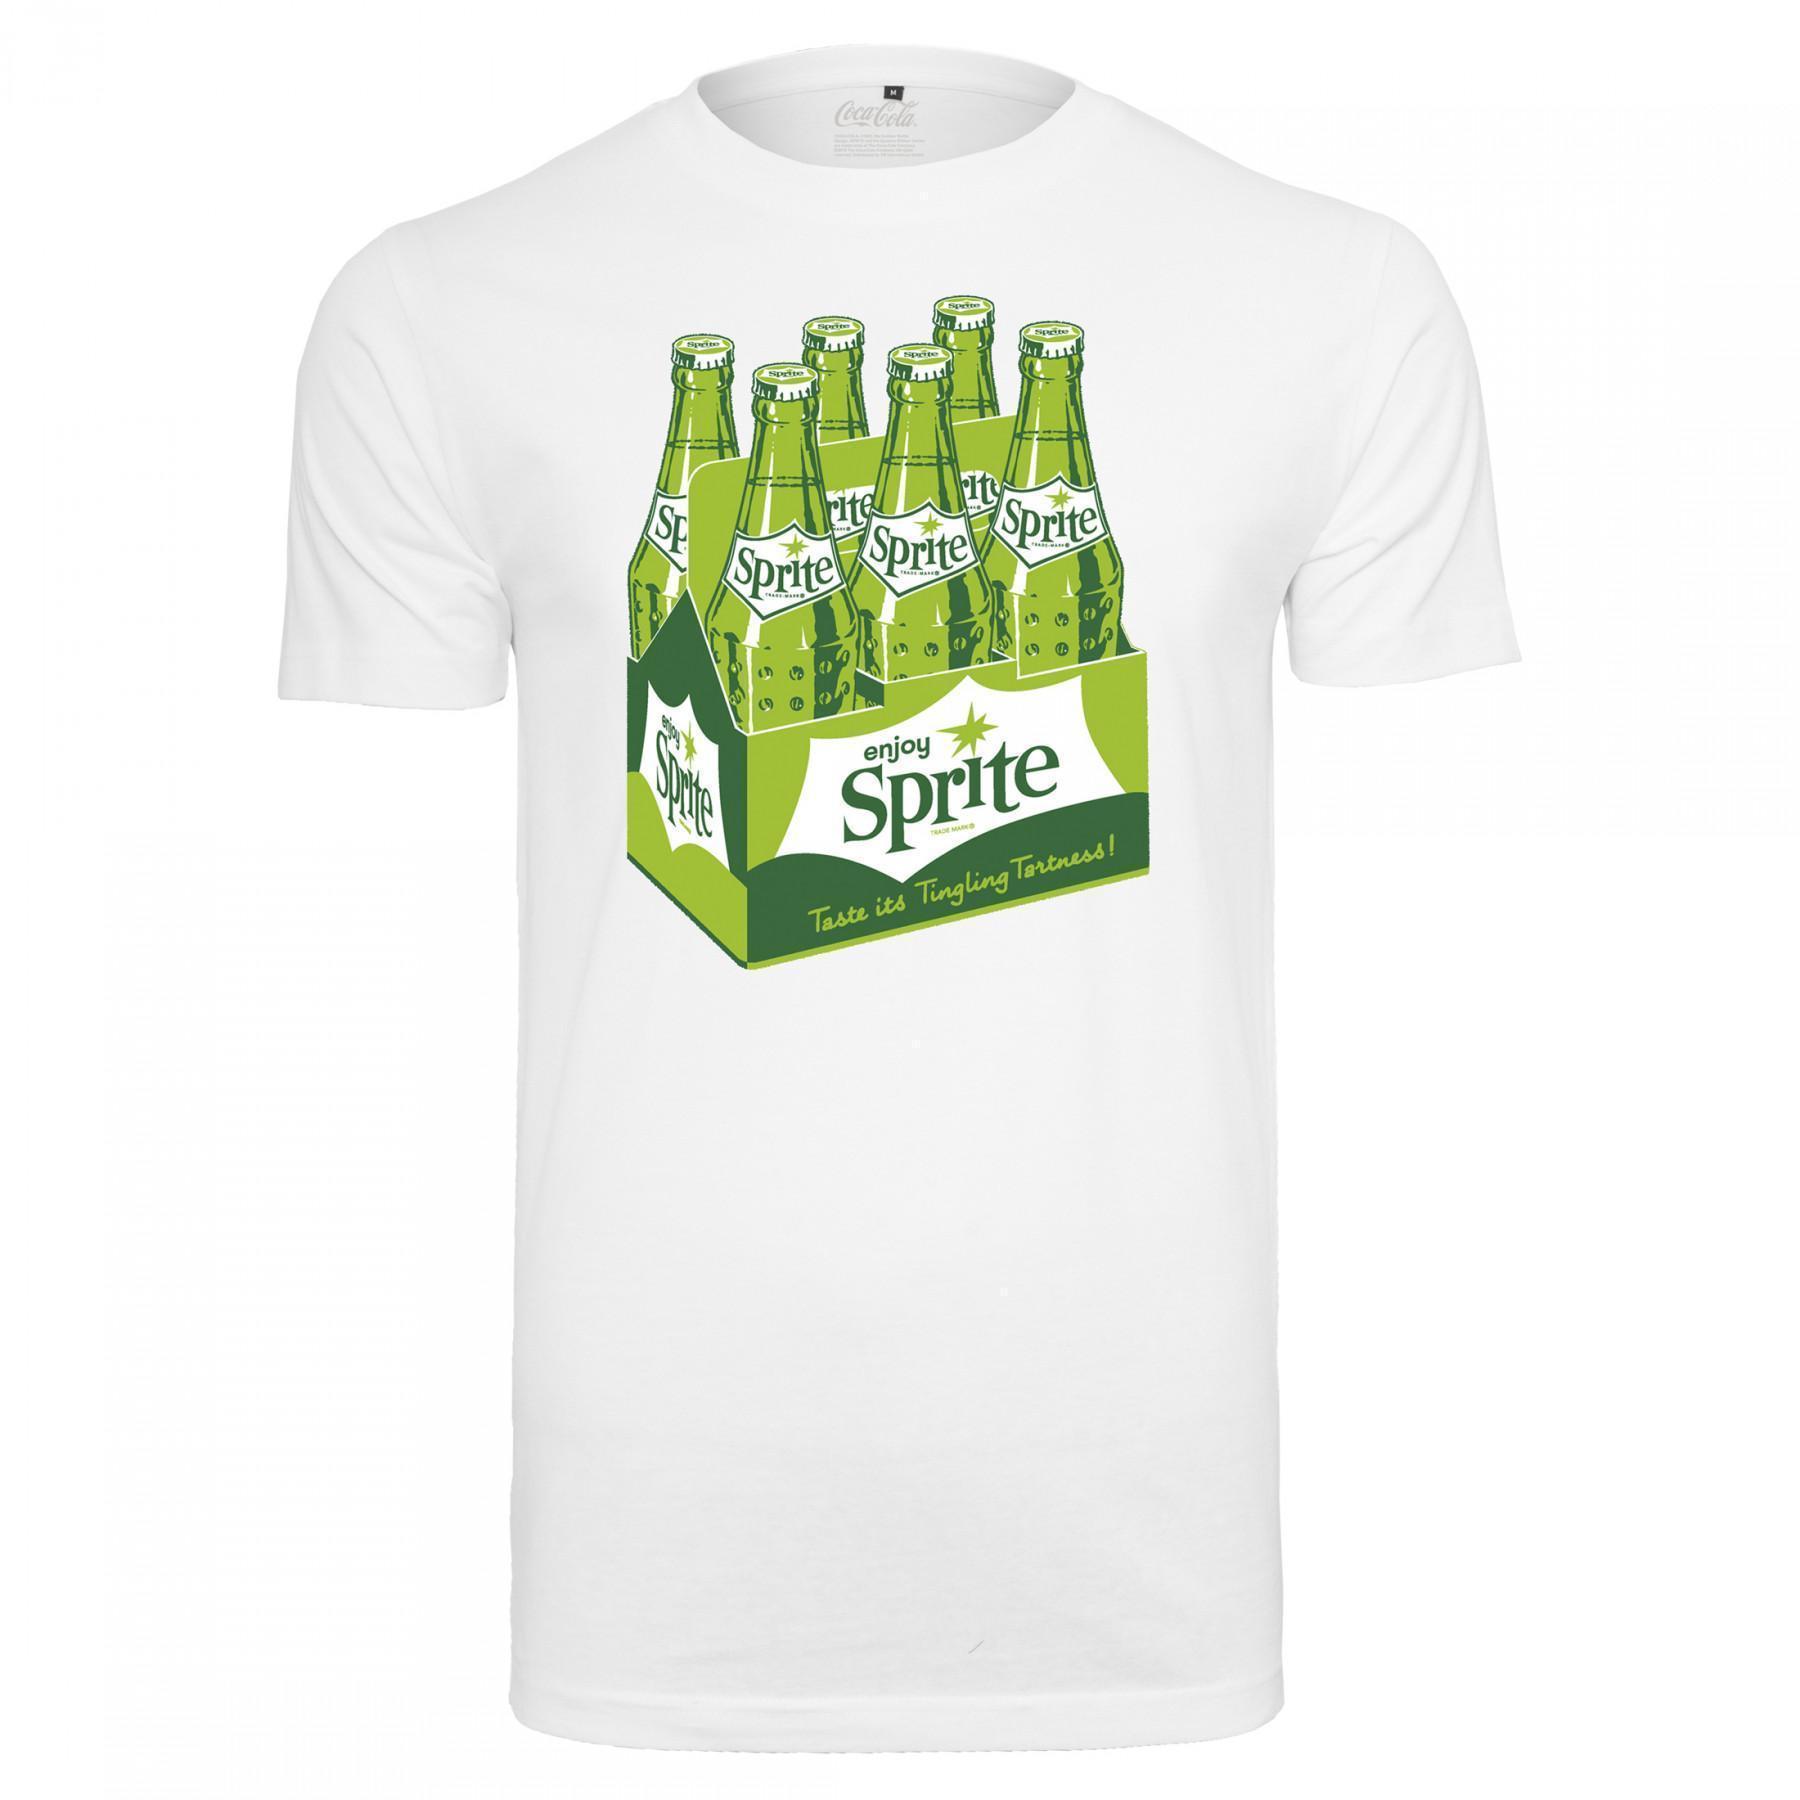 T-shirt urban classic prite bottle